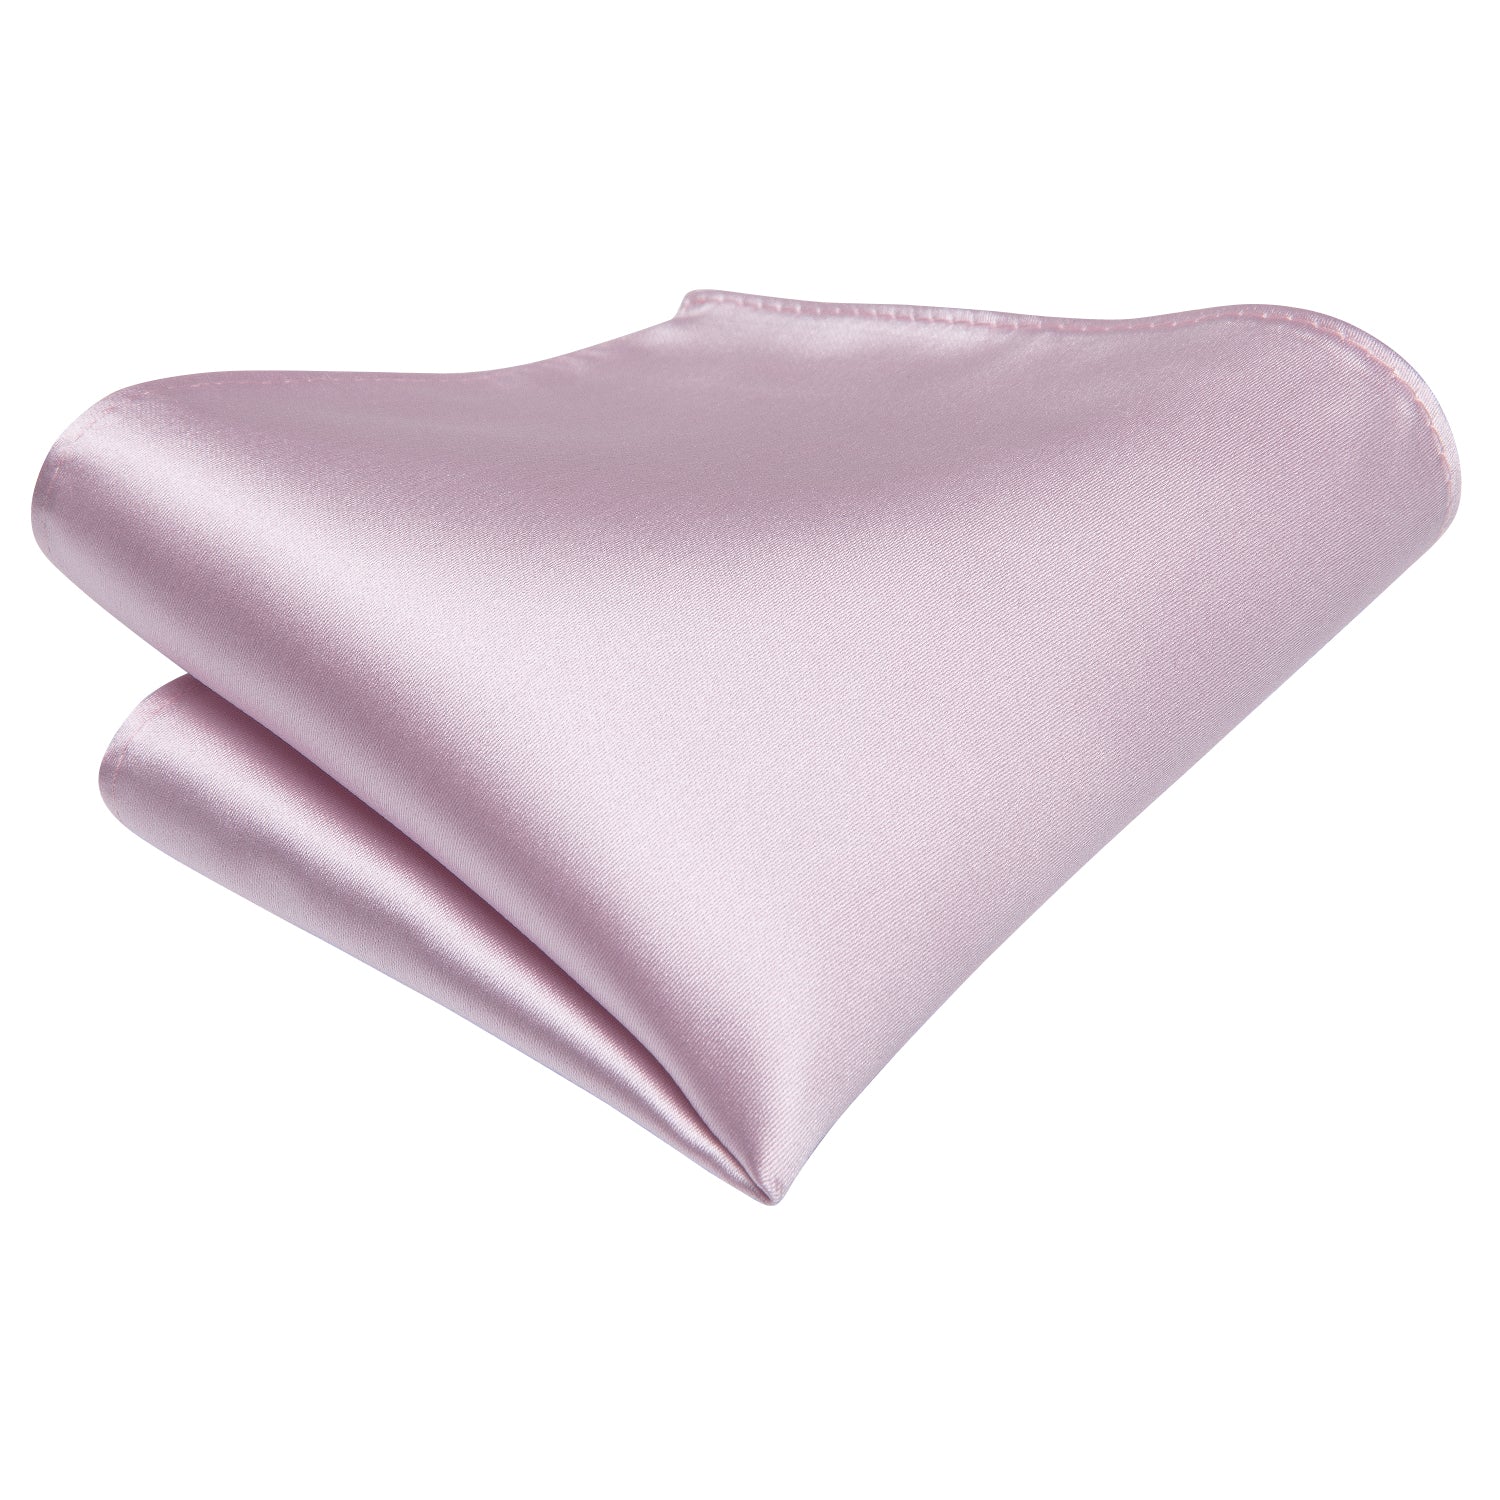 Light Pink Solid Tie Pocket Square Cufflinks Set